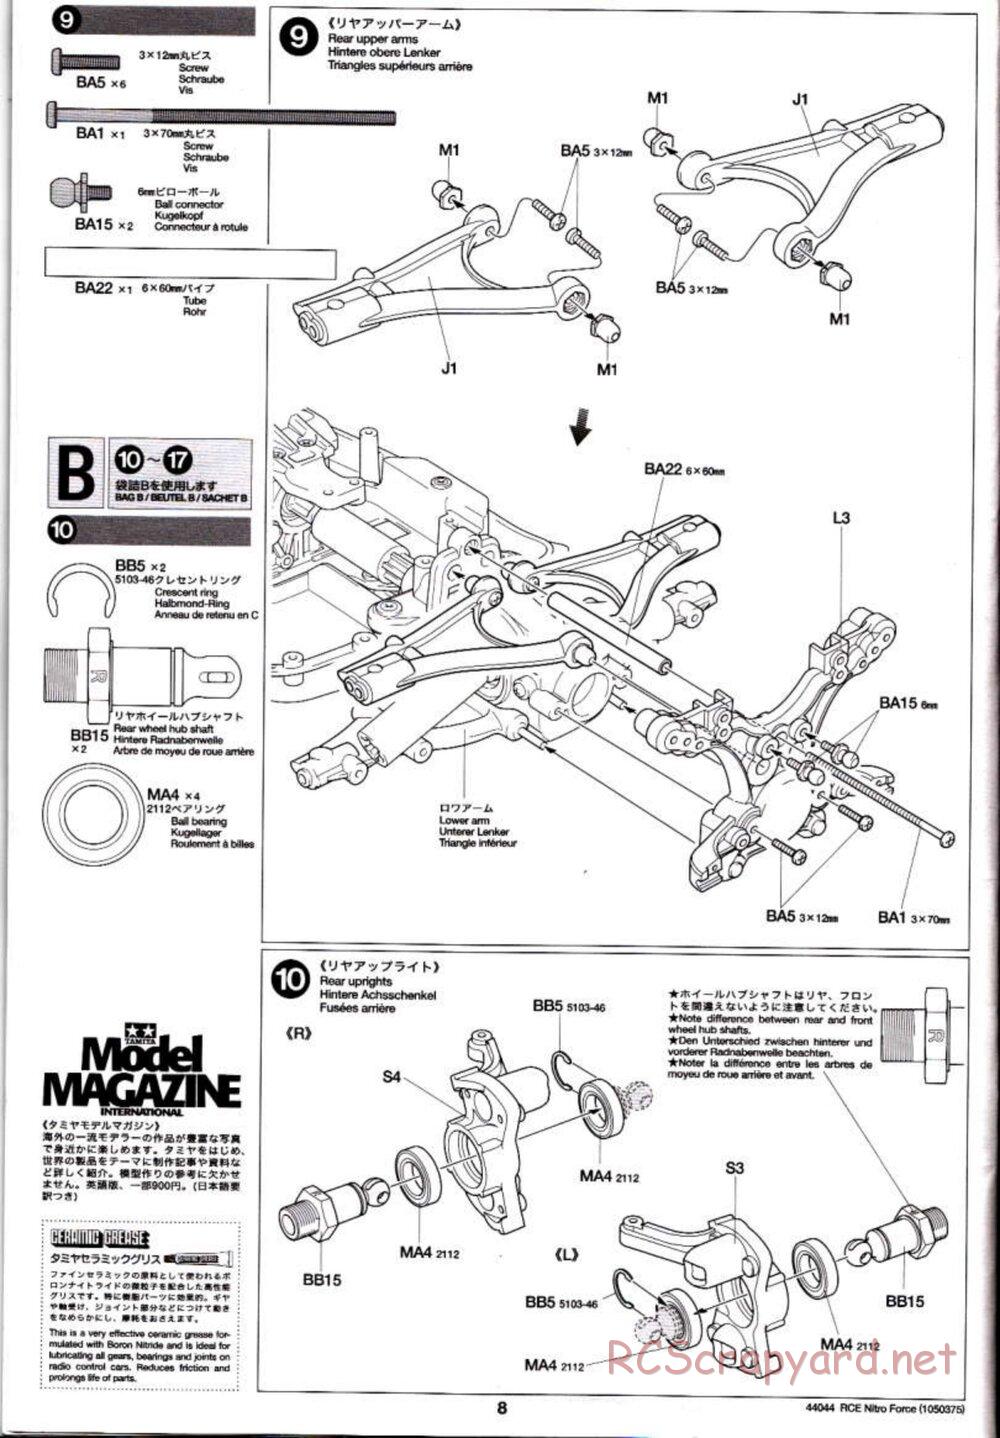 Tamiya - Nitro Force - NDF-01 Chassis - Manual - Page 8